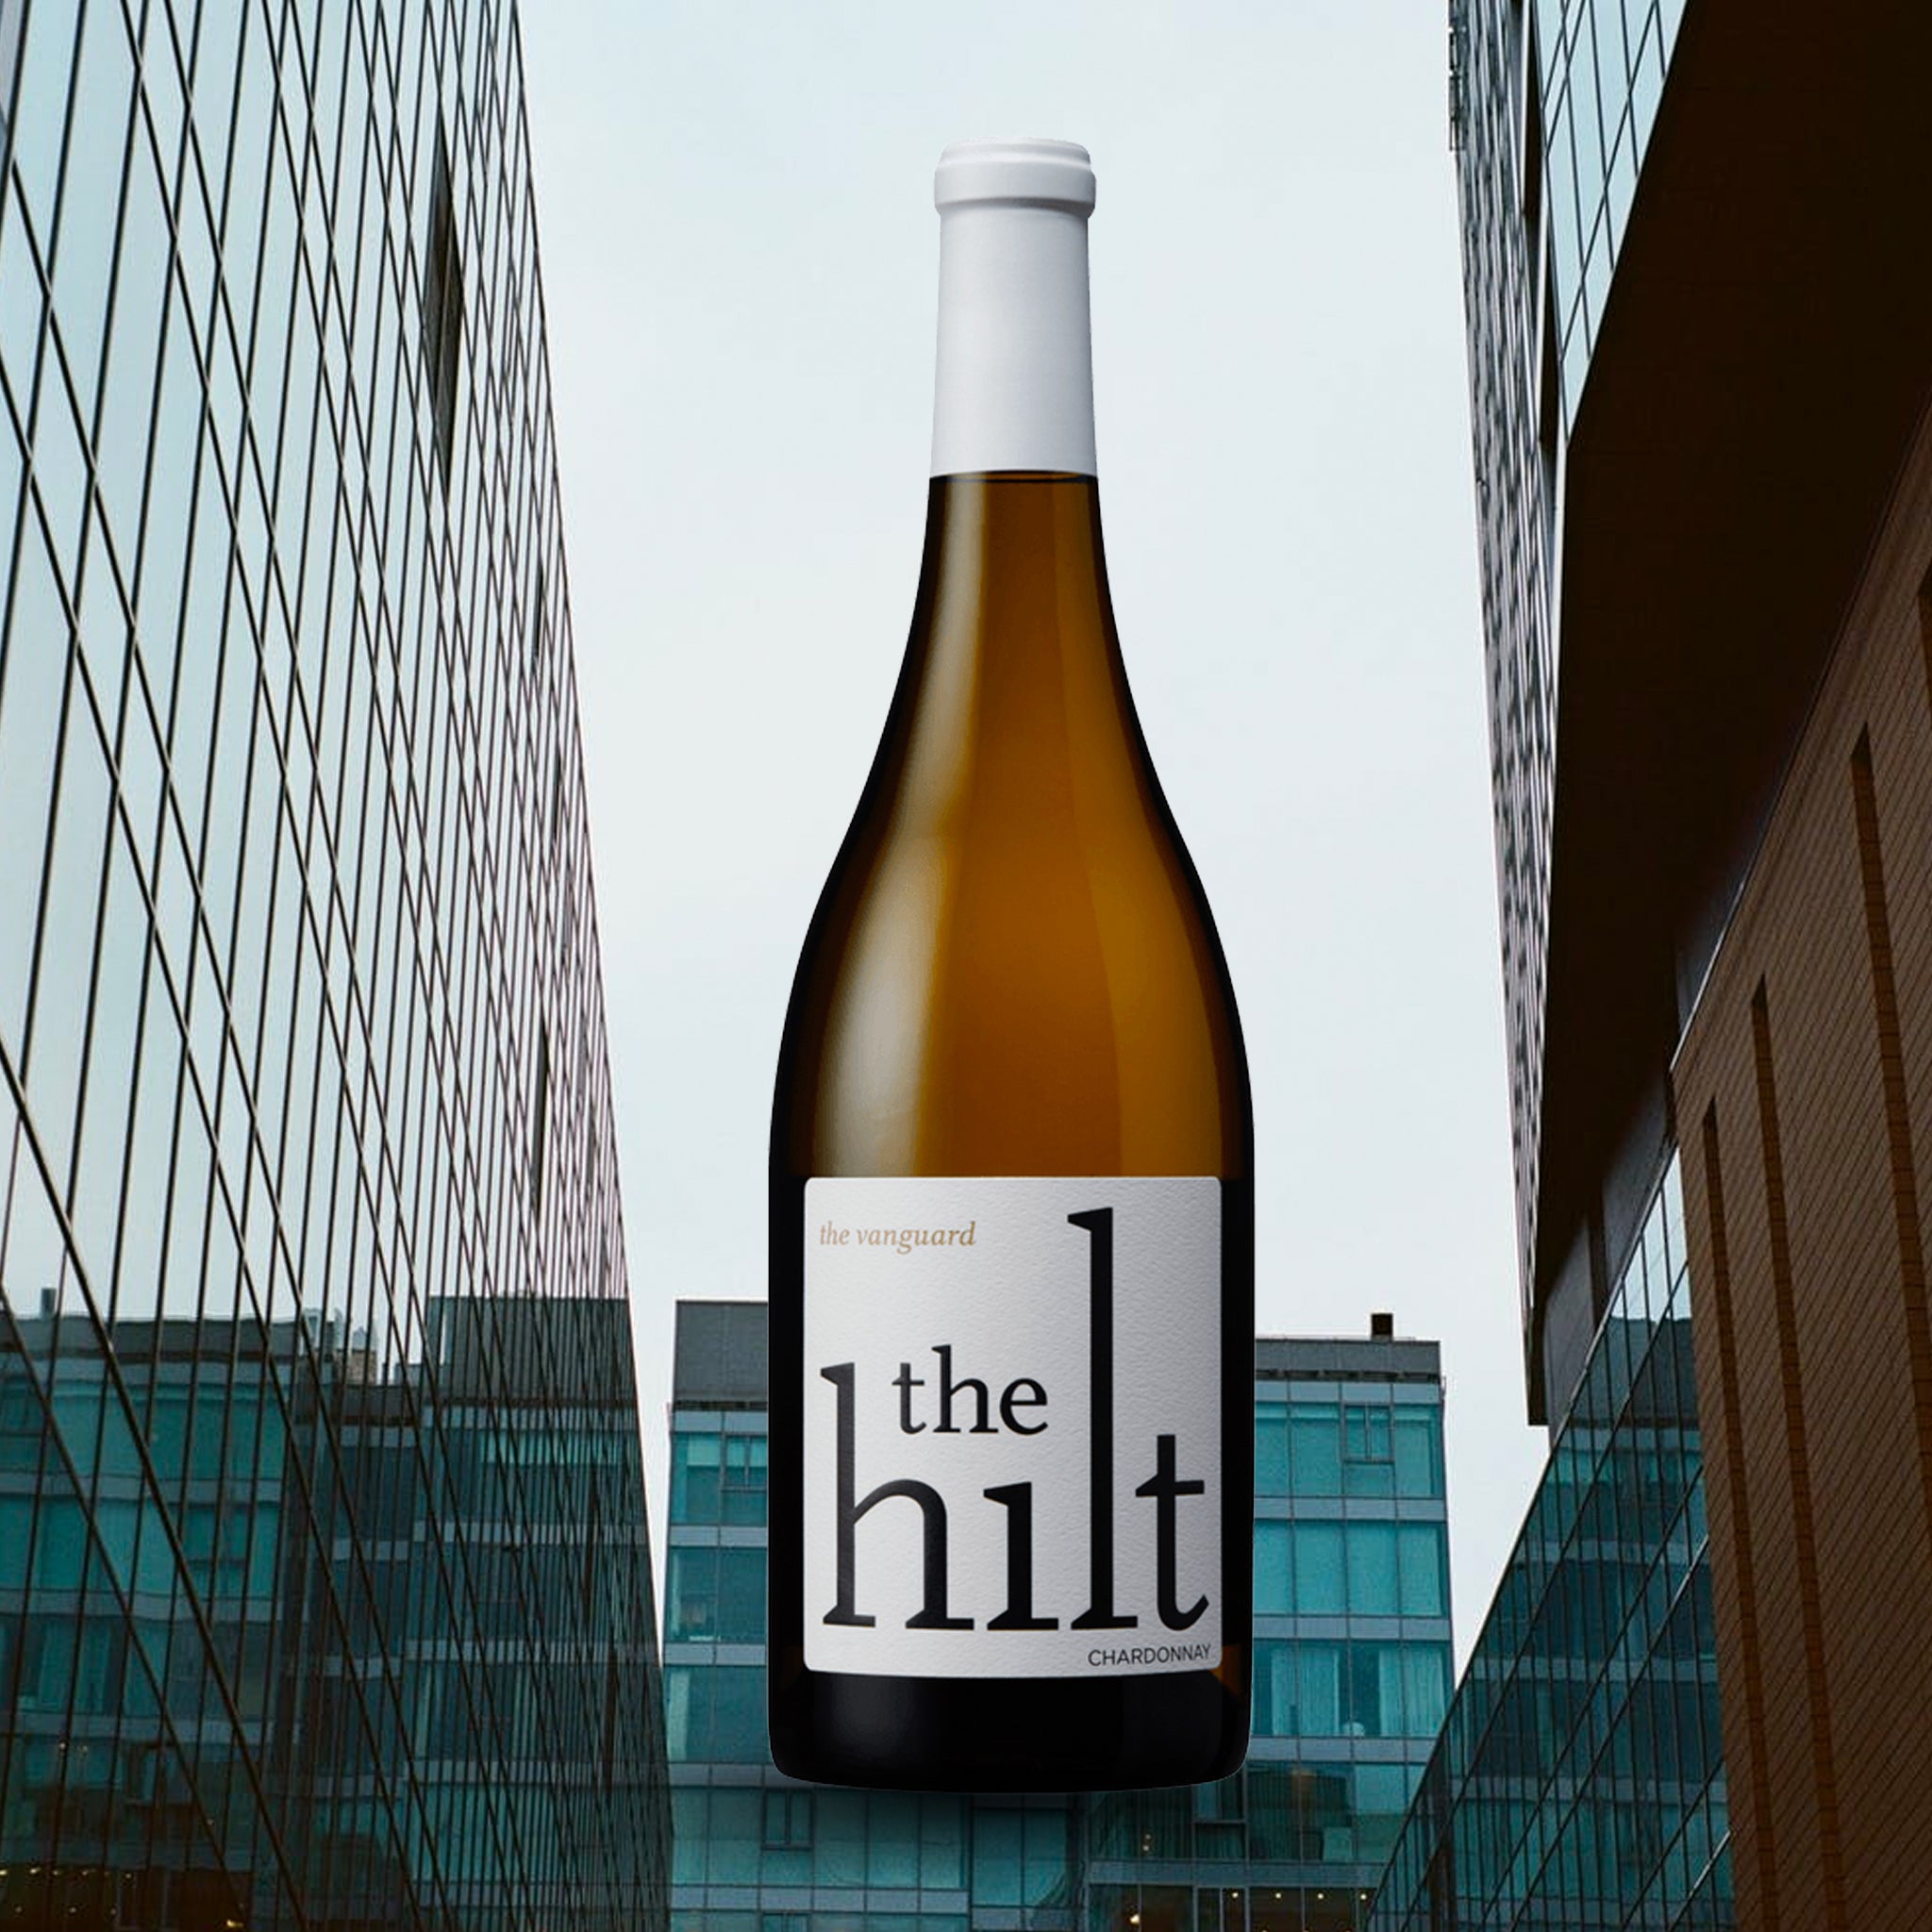 The Hilt Vanguard Chardonnay 2015